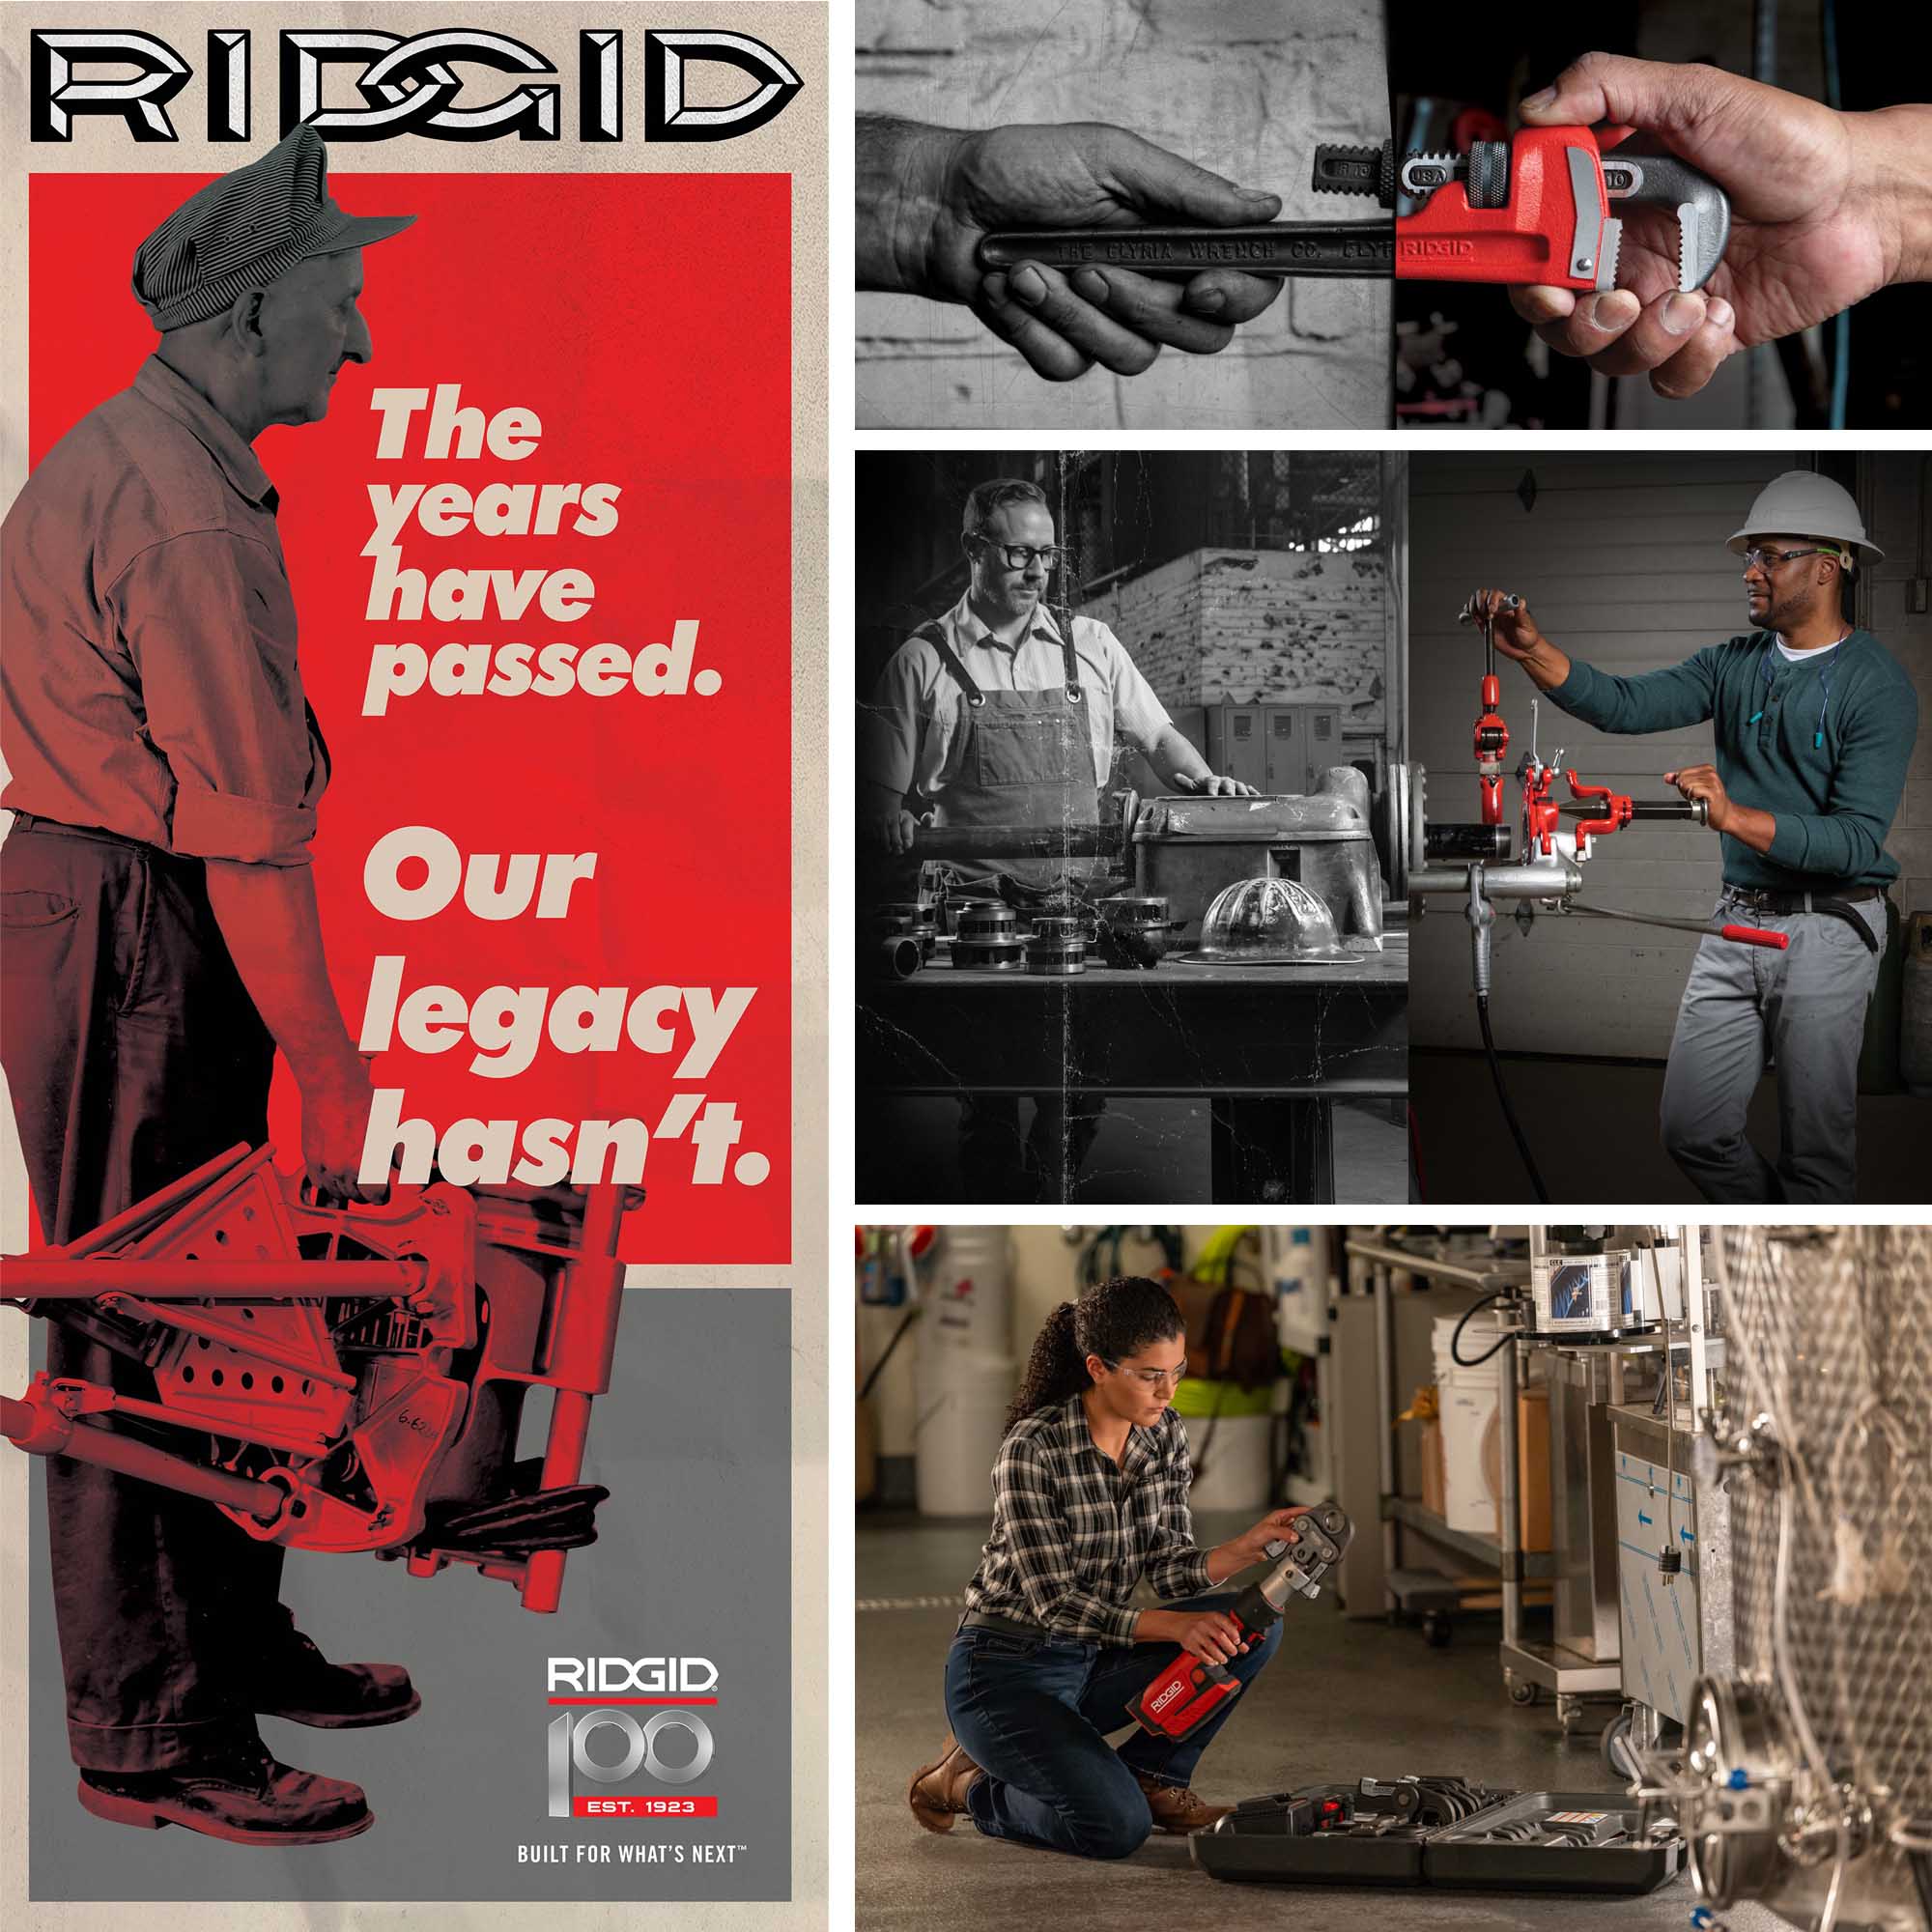 RIDGID celebrates 100 years